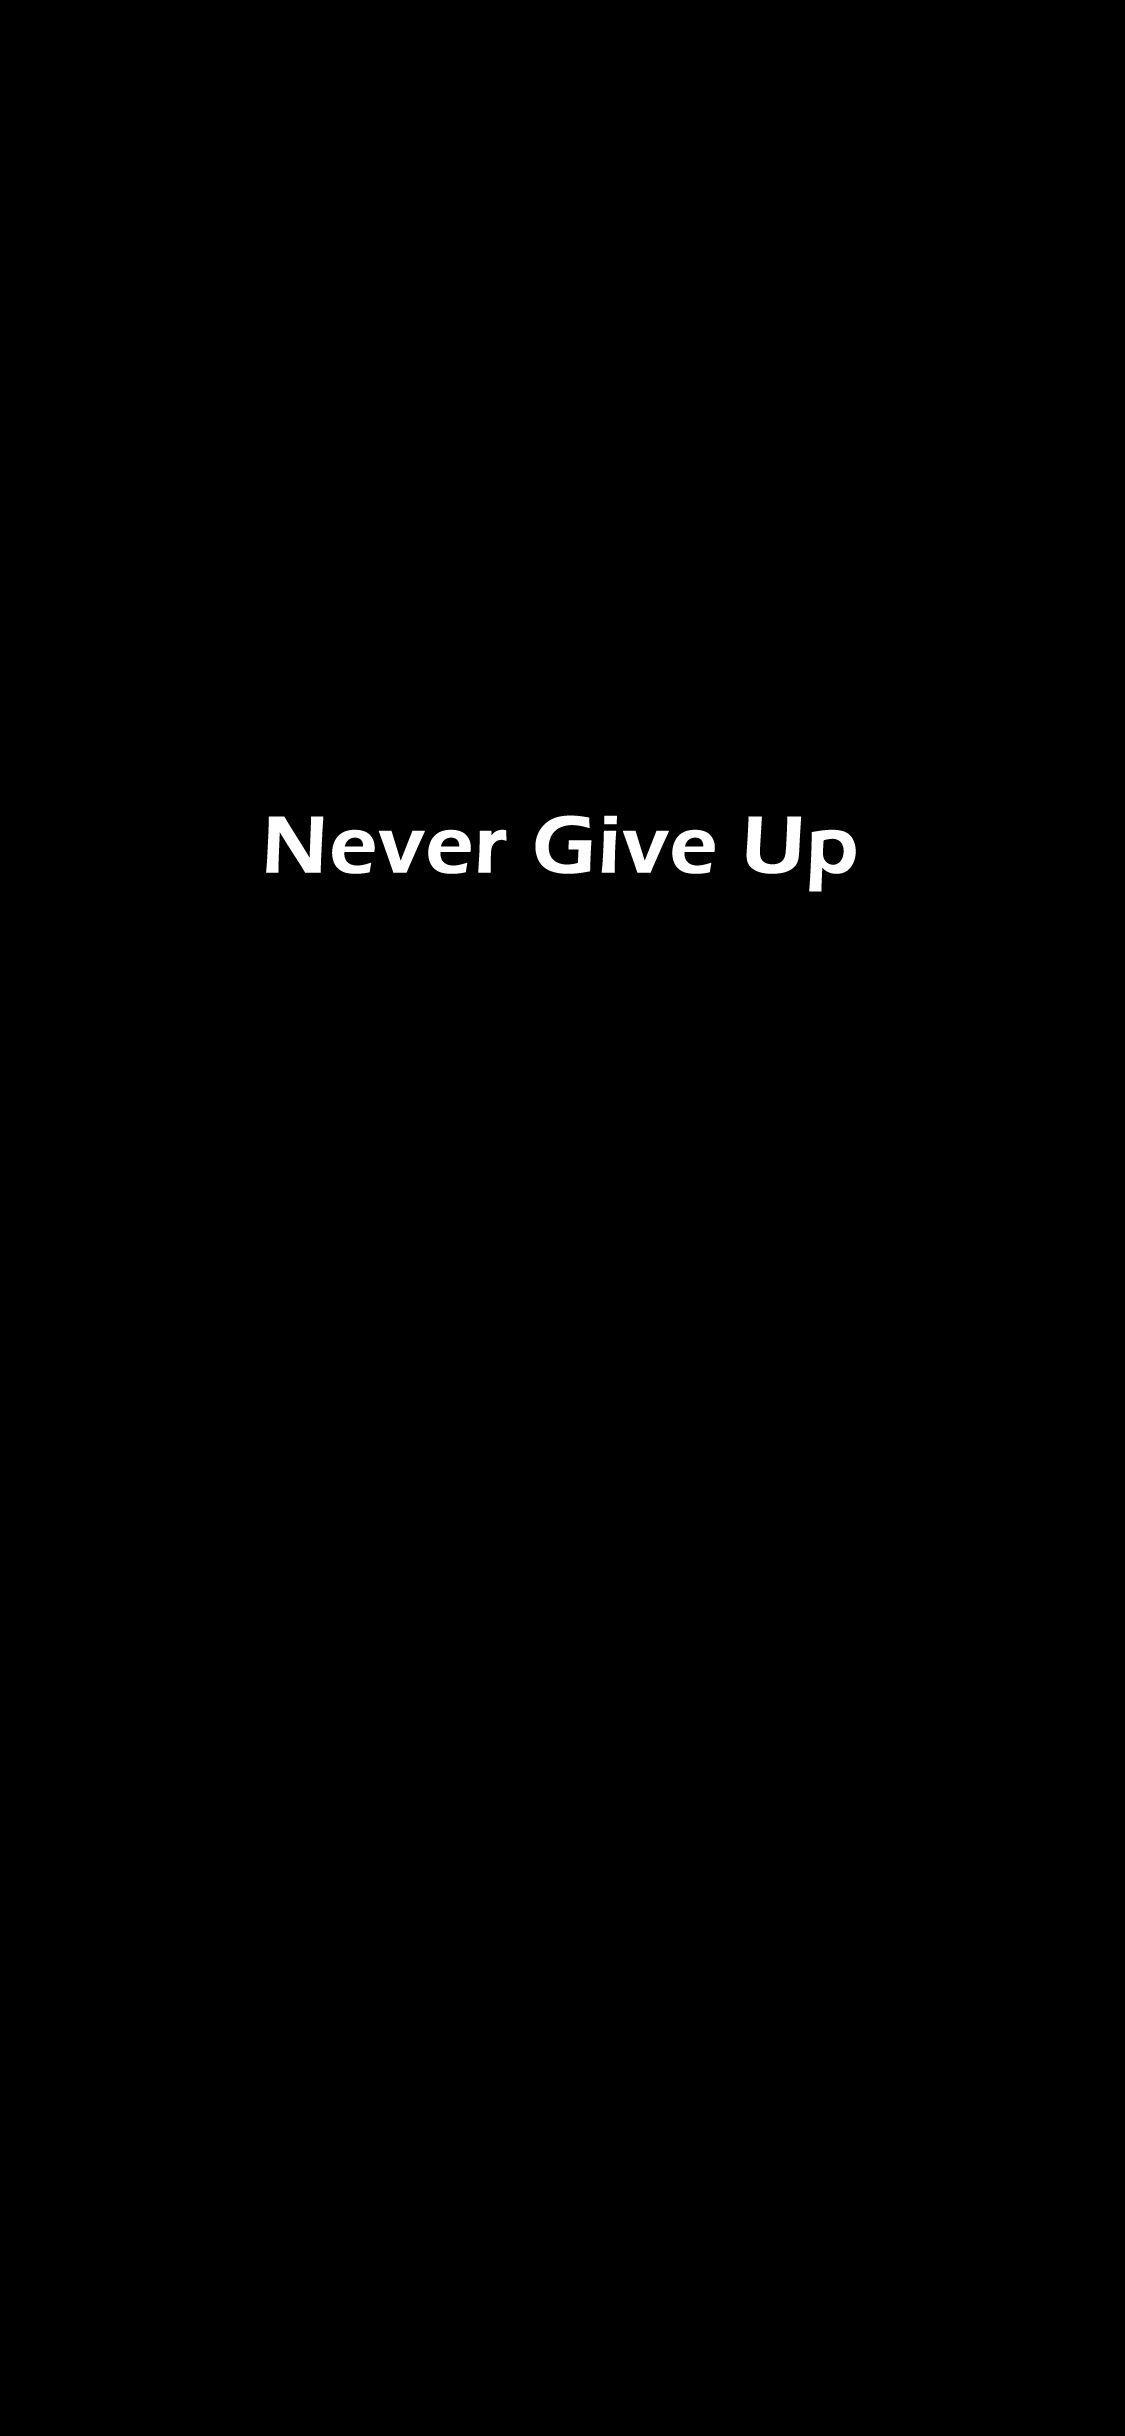 Never give up. #iPhoneX #Wallpaper #BlackAndWhite #Attitude